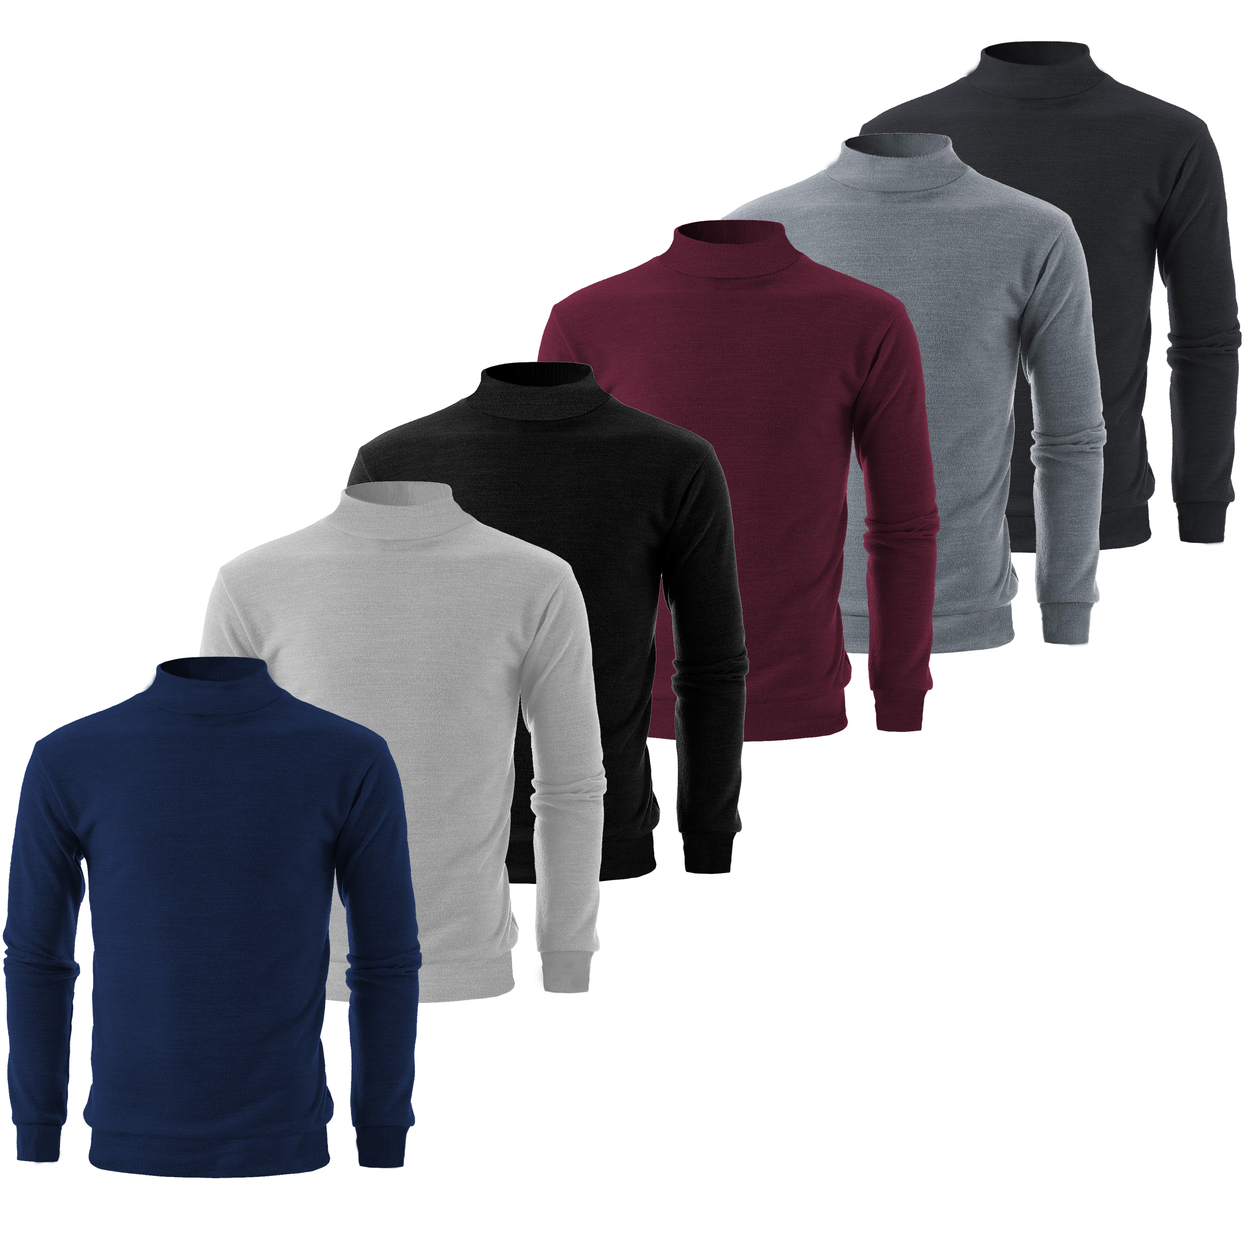 3-Pack: Men's Winter Warm Cozy Knit Slim Fit Mock Neck Sweater - Large